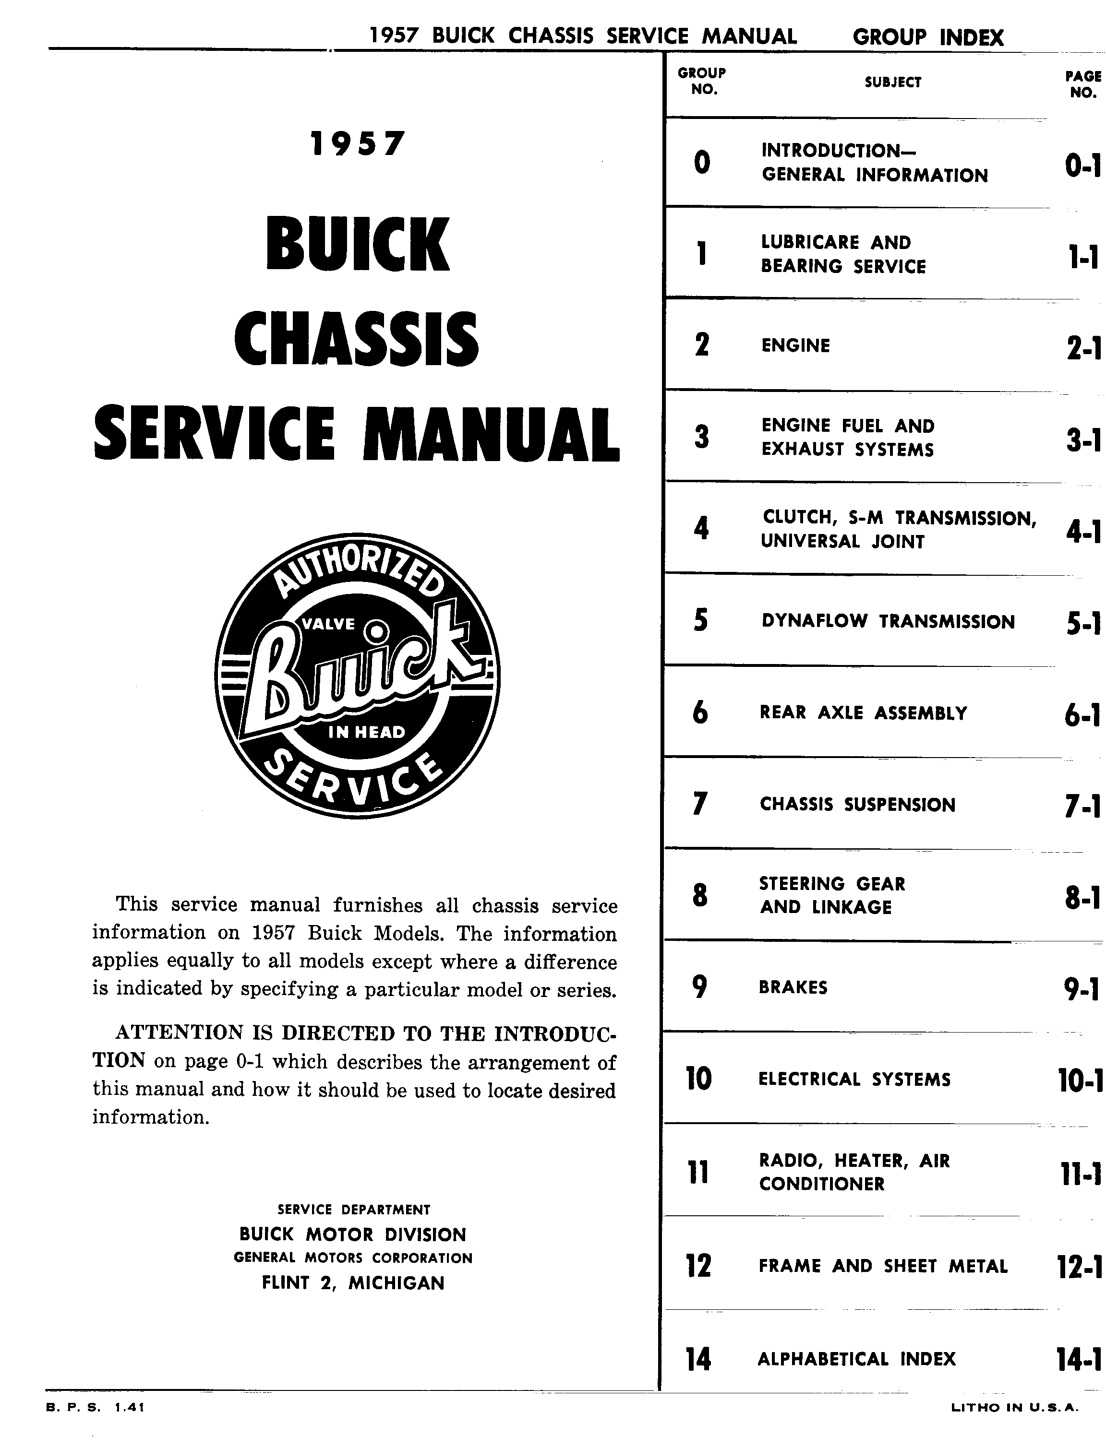 n_01 1957 Buick Shop Manual - Gen Information-002-002.jpg